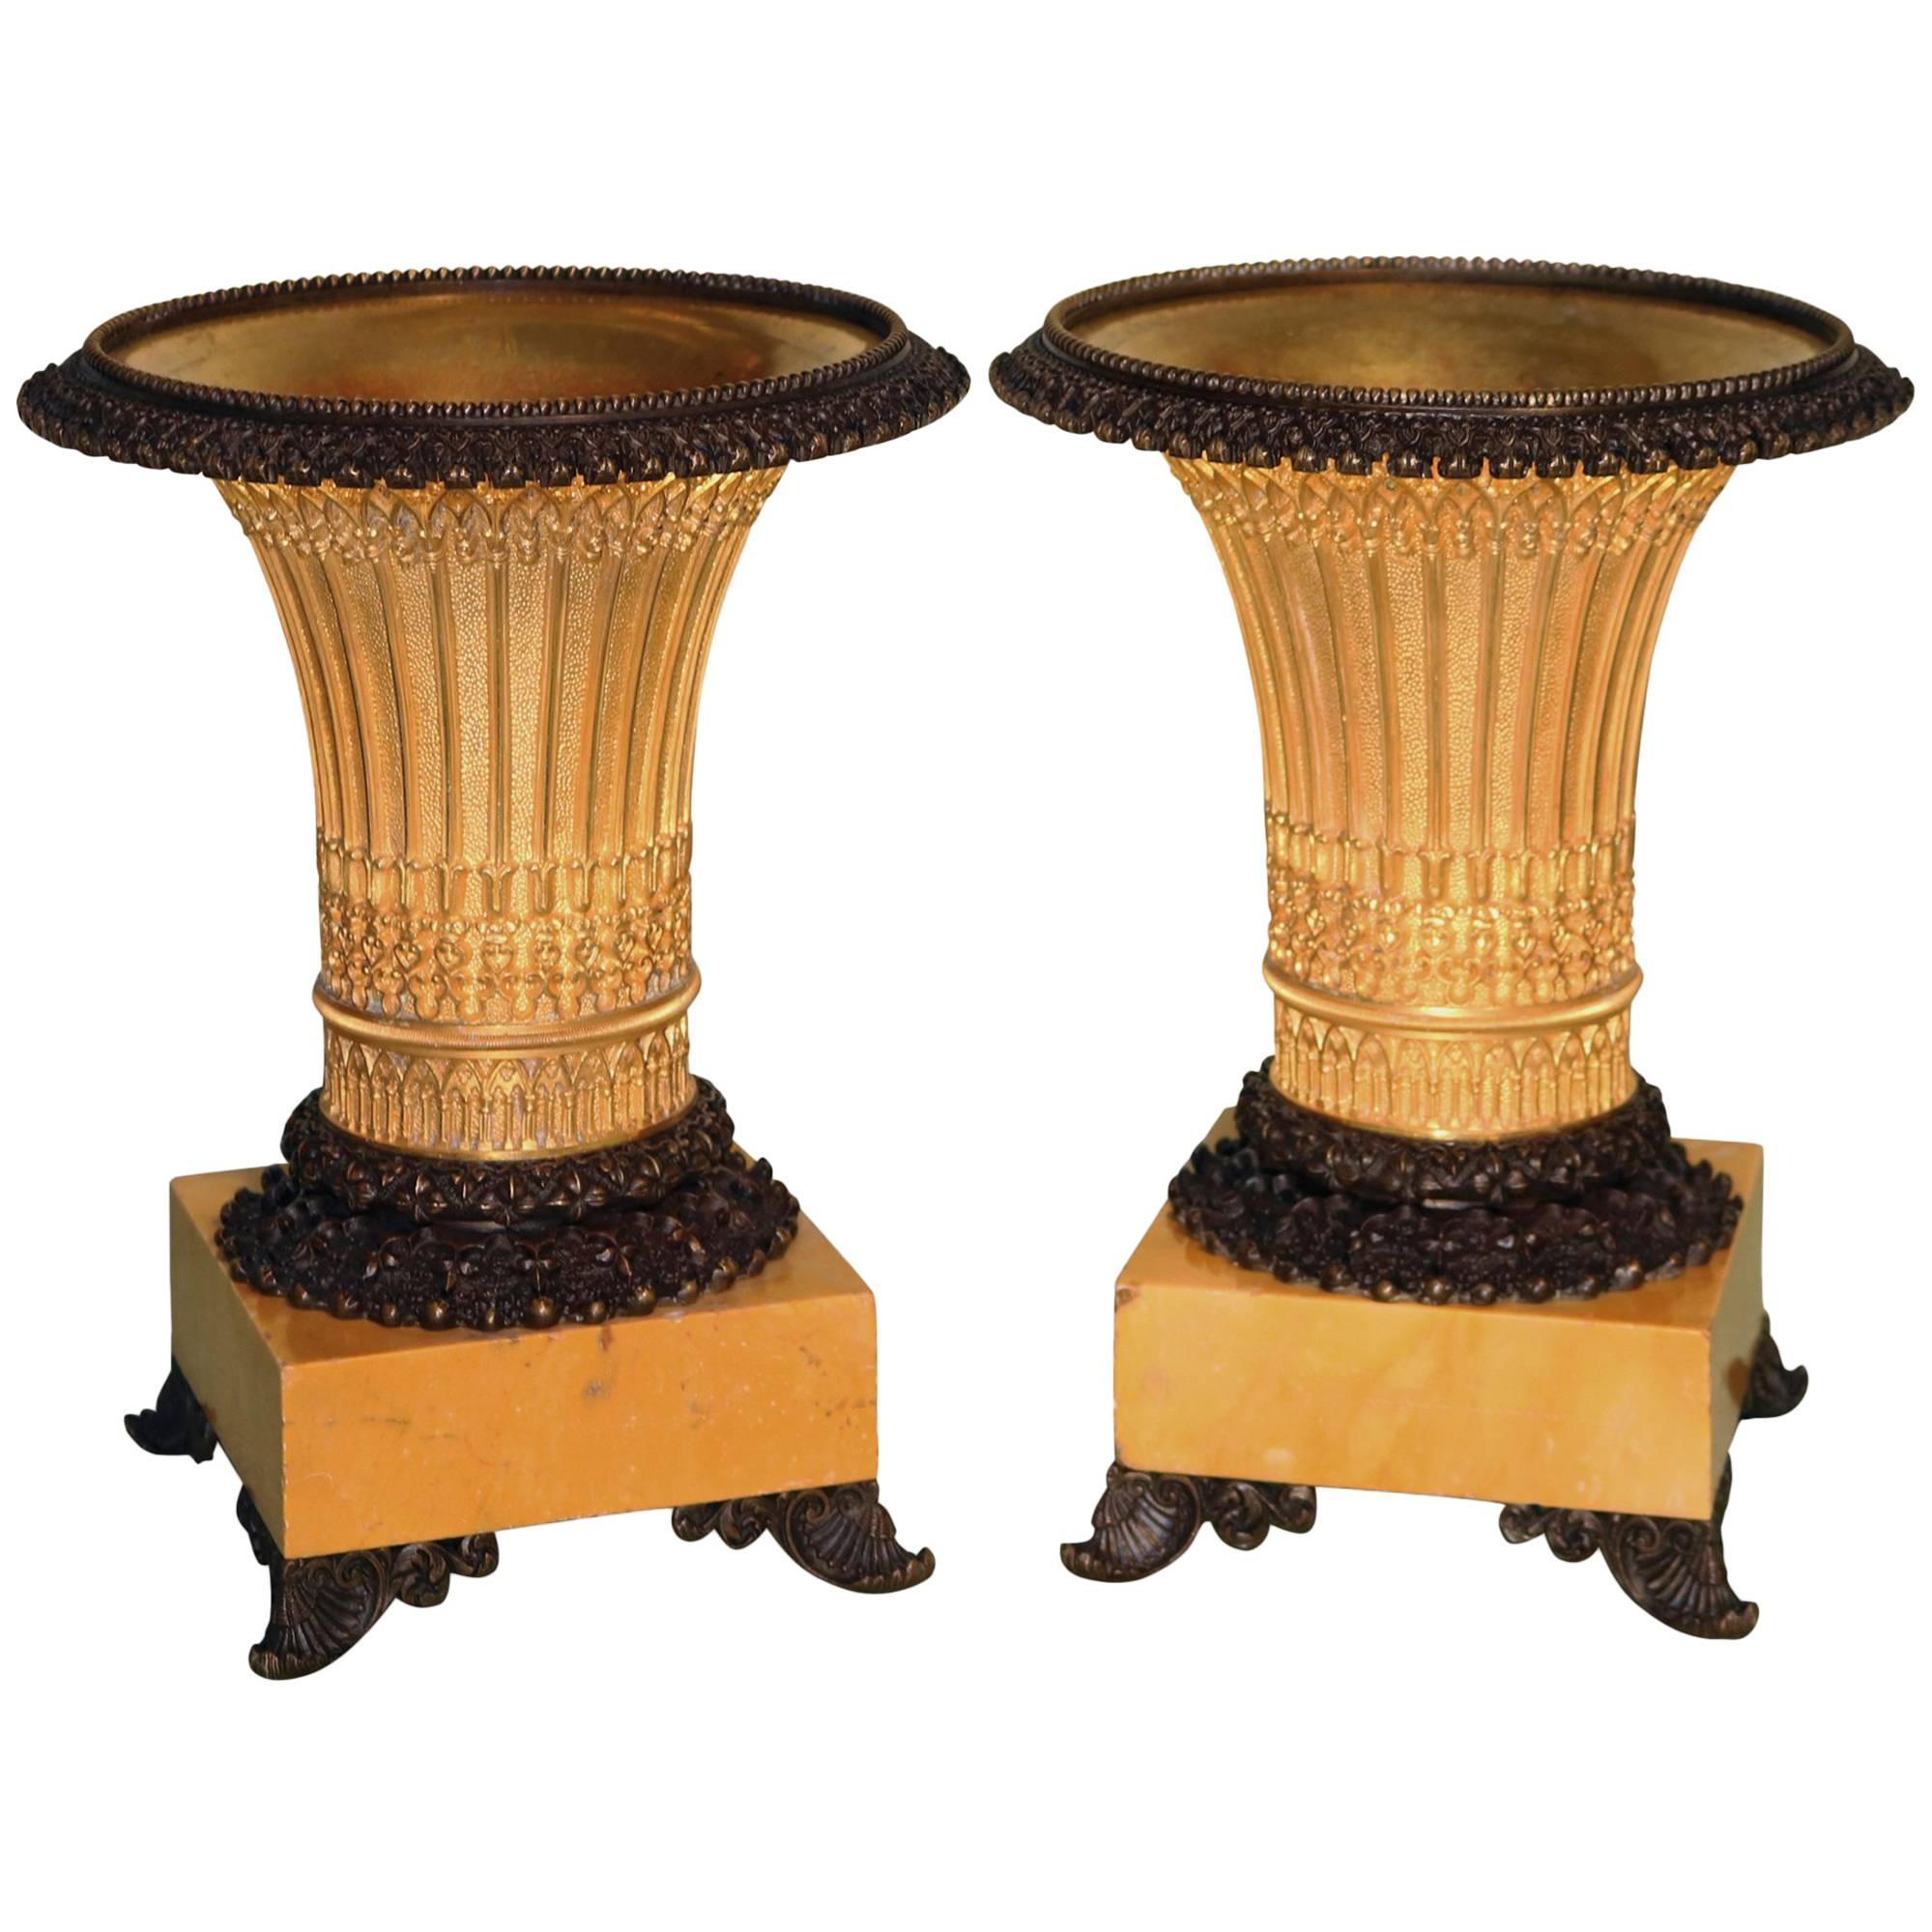 19th Century bronze and ormolu Gothic style vase-shaped tazzas